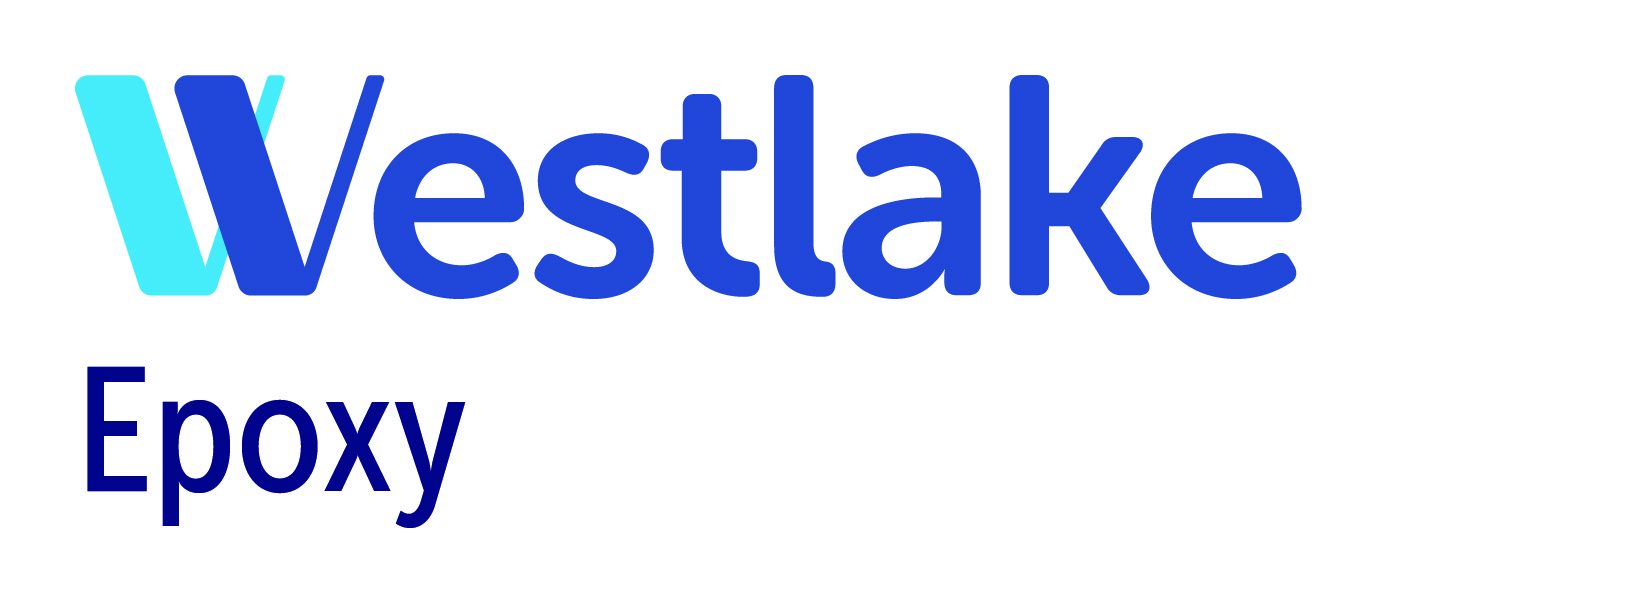 westlake_epoxy_logo-01